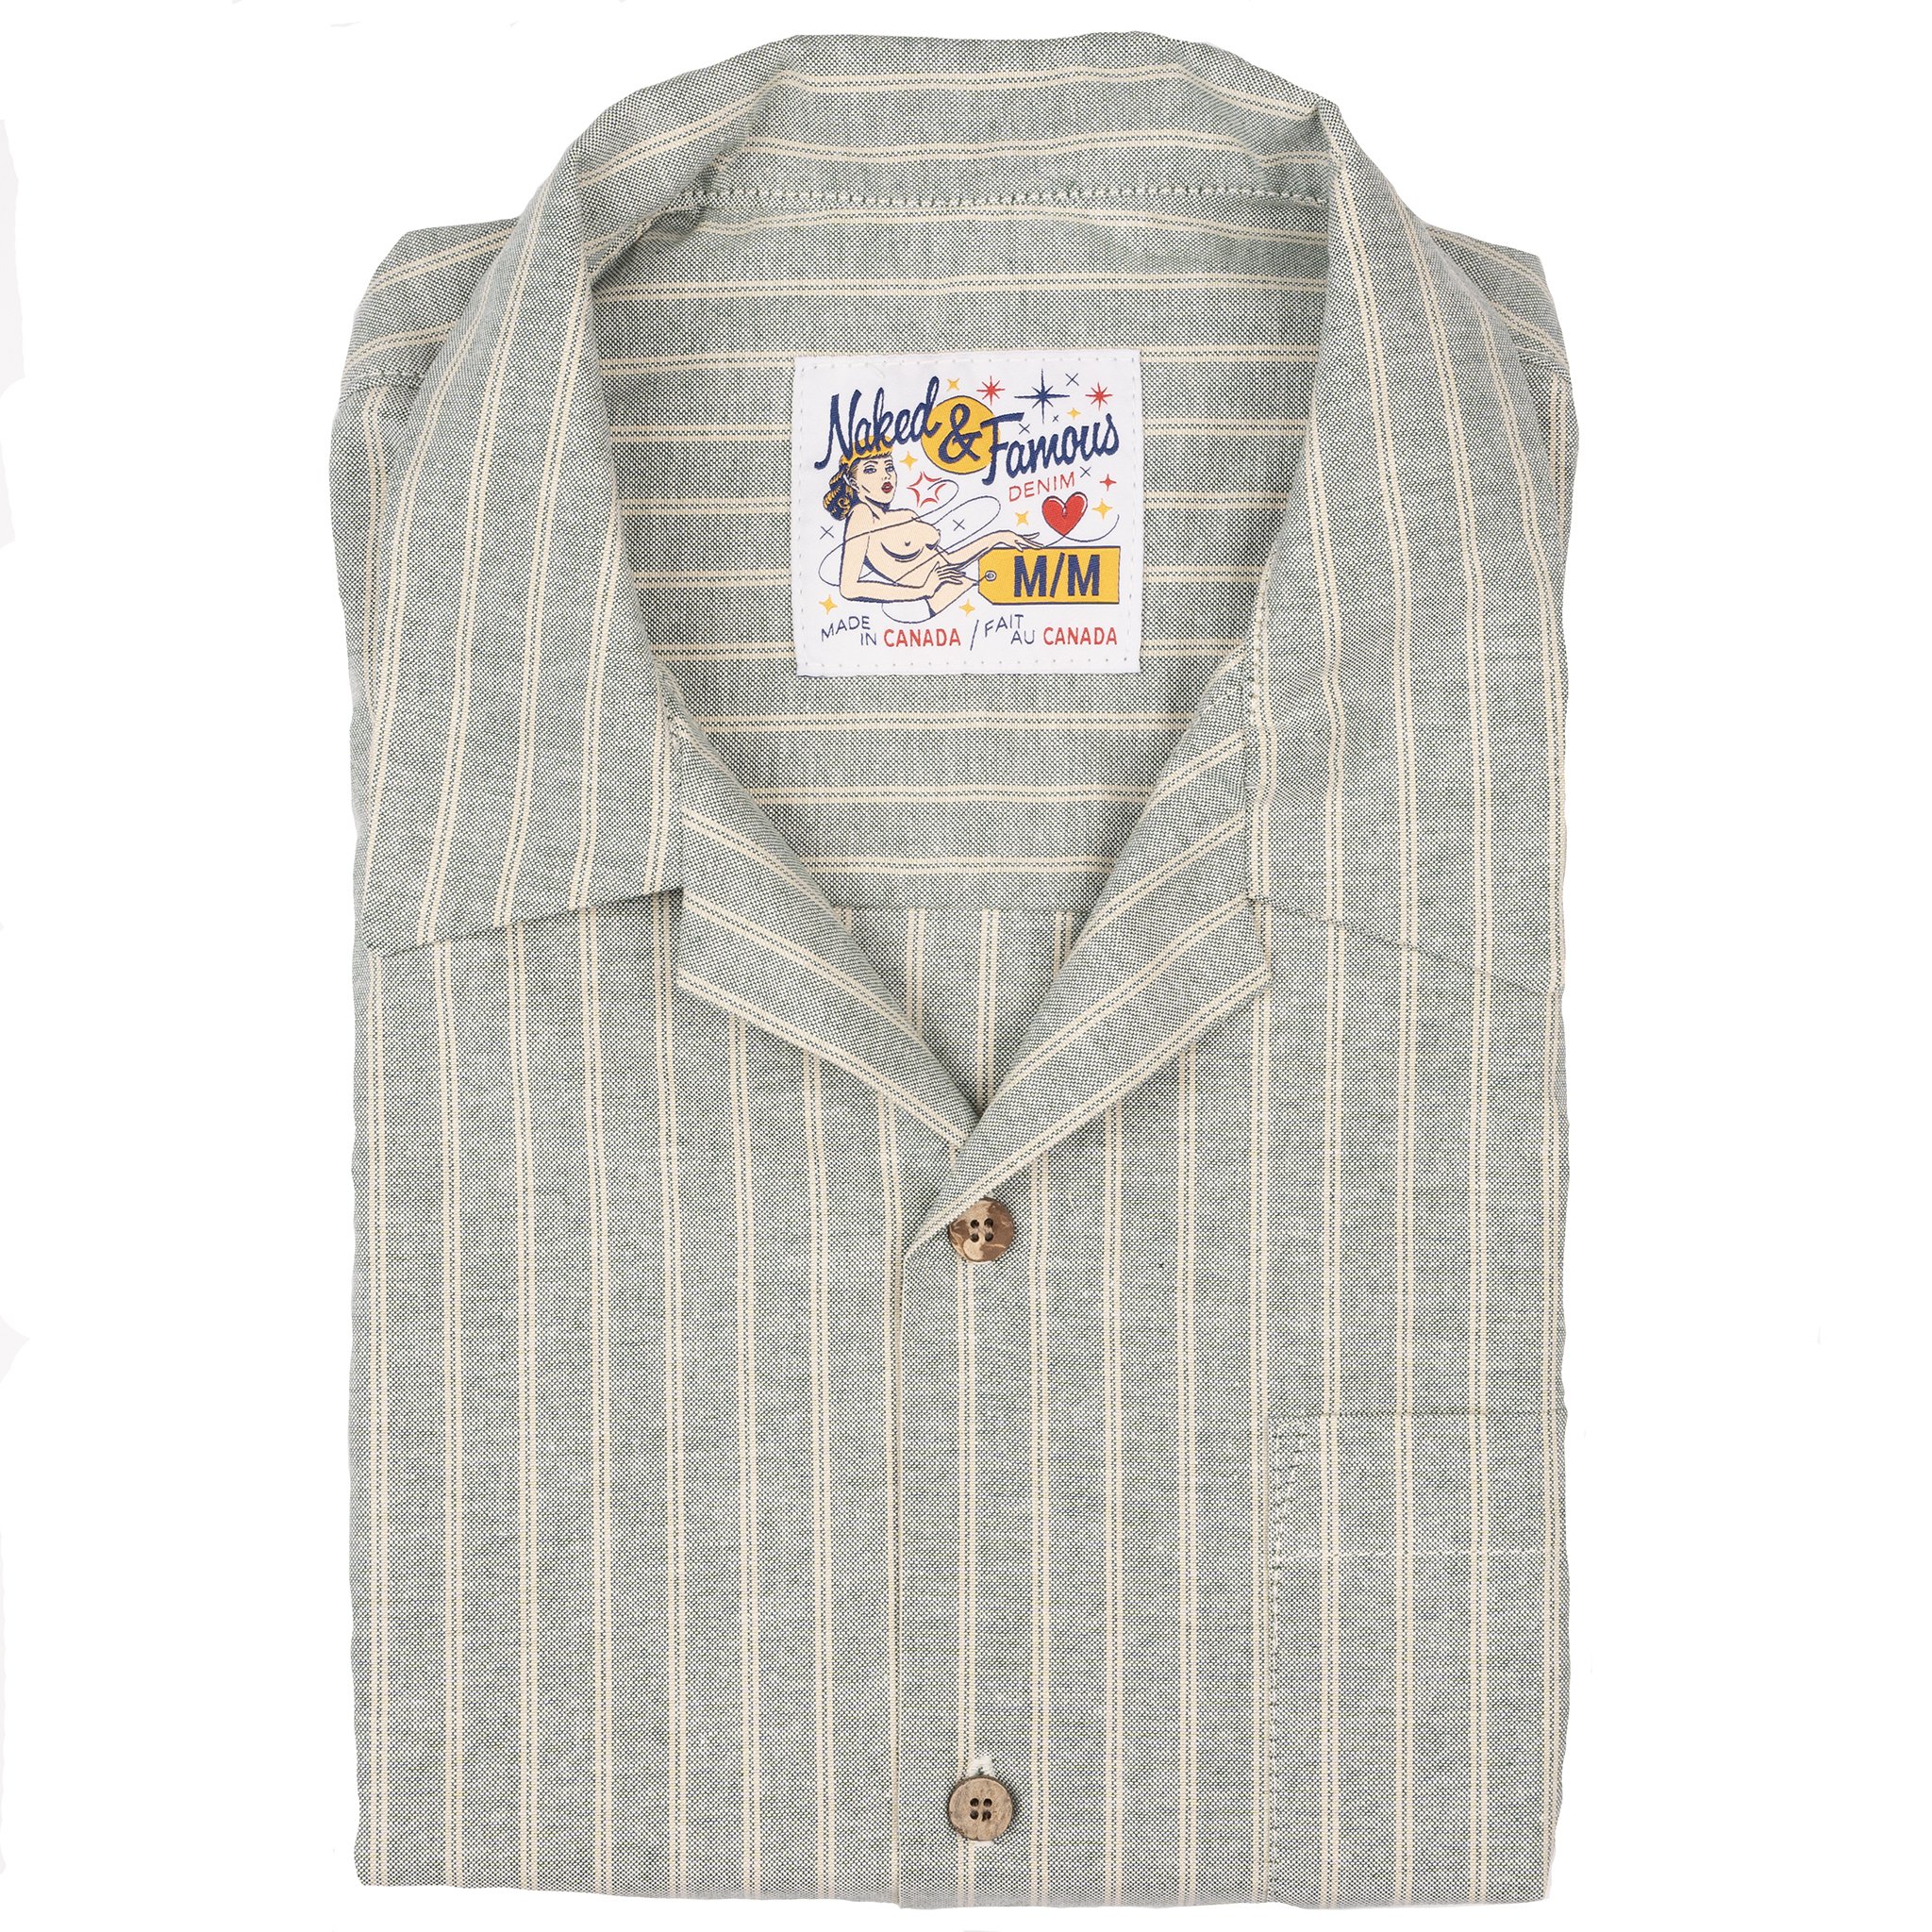  Aloha Shirt - Striped Oxford - Vintage Indigo 